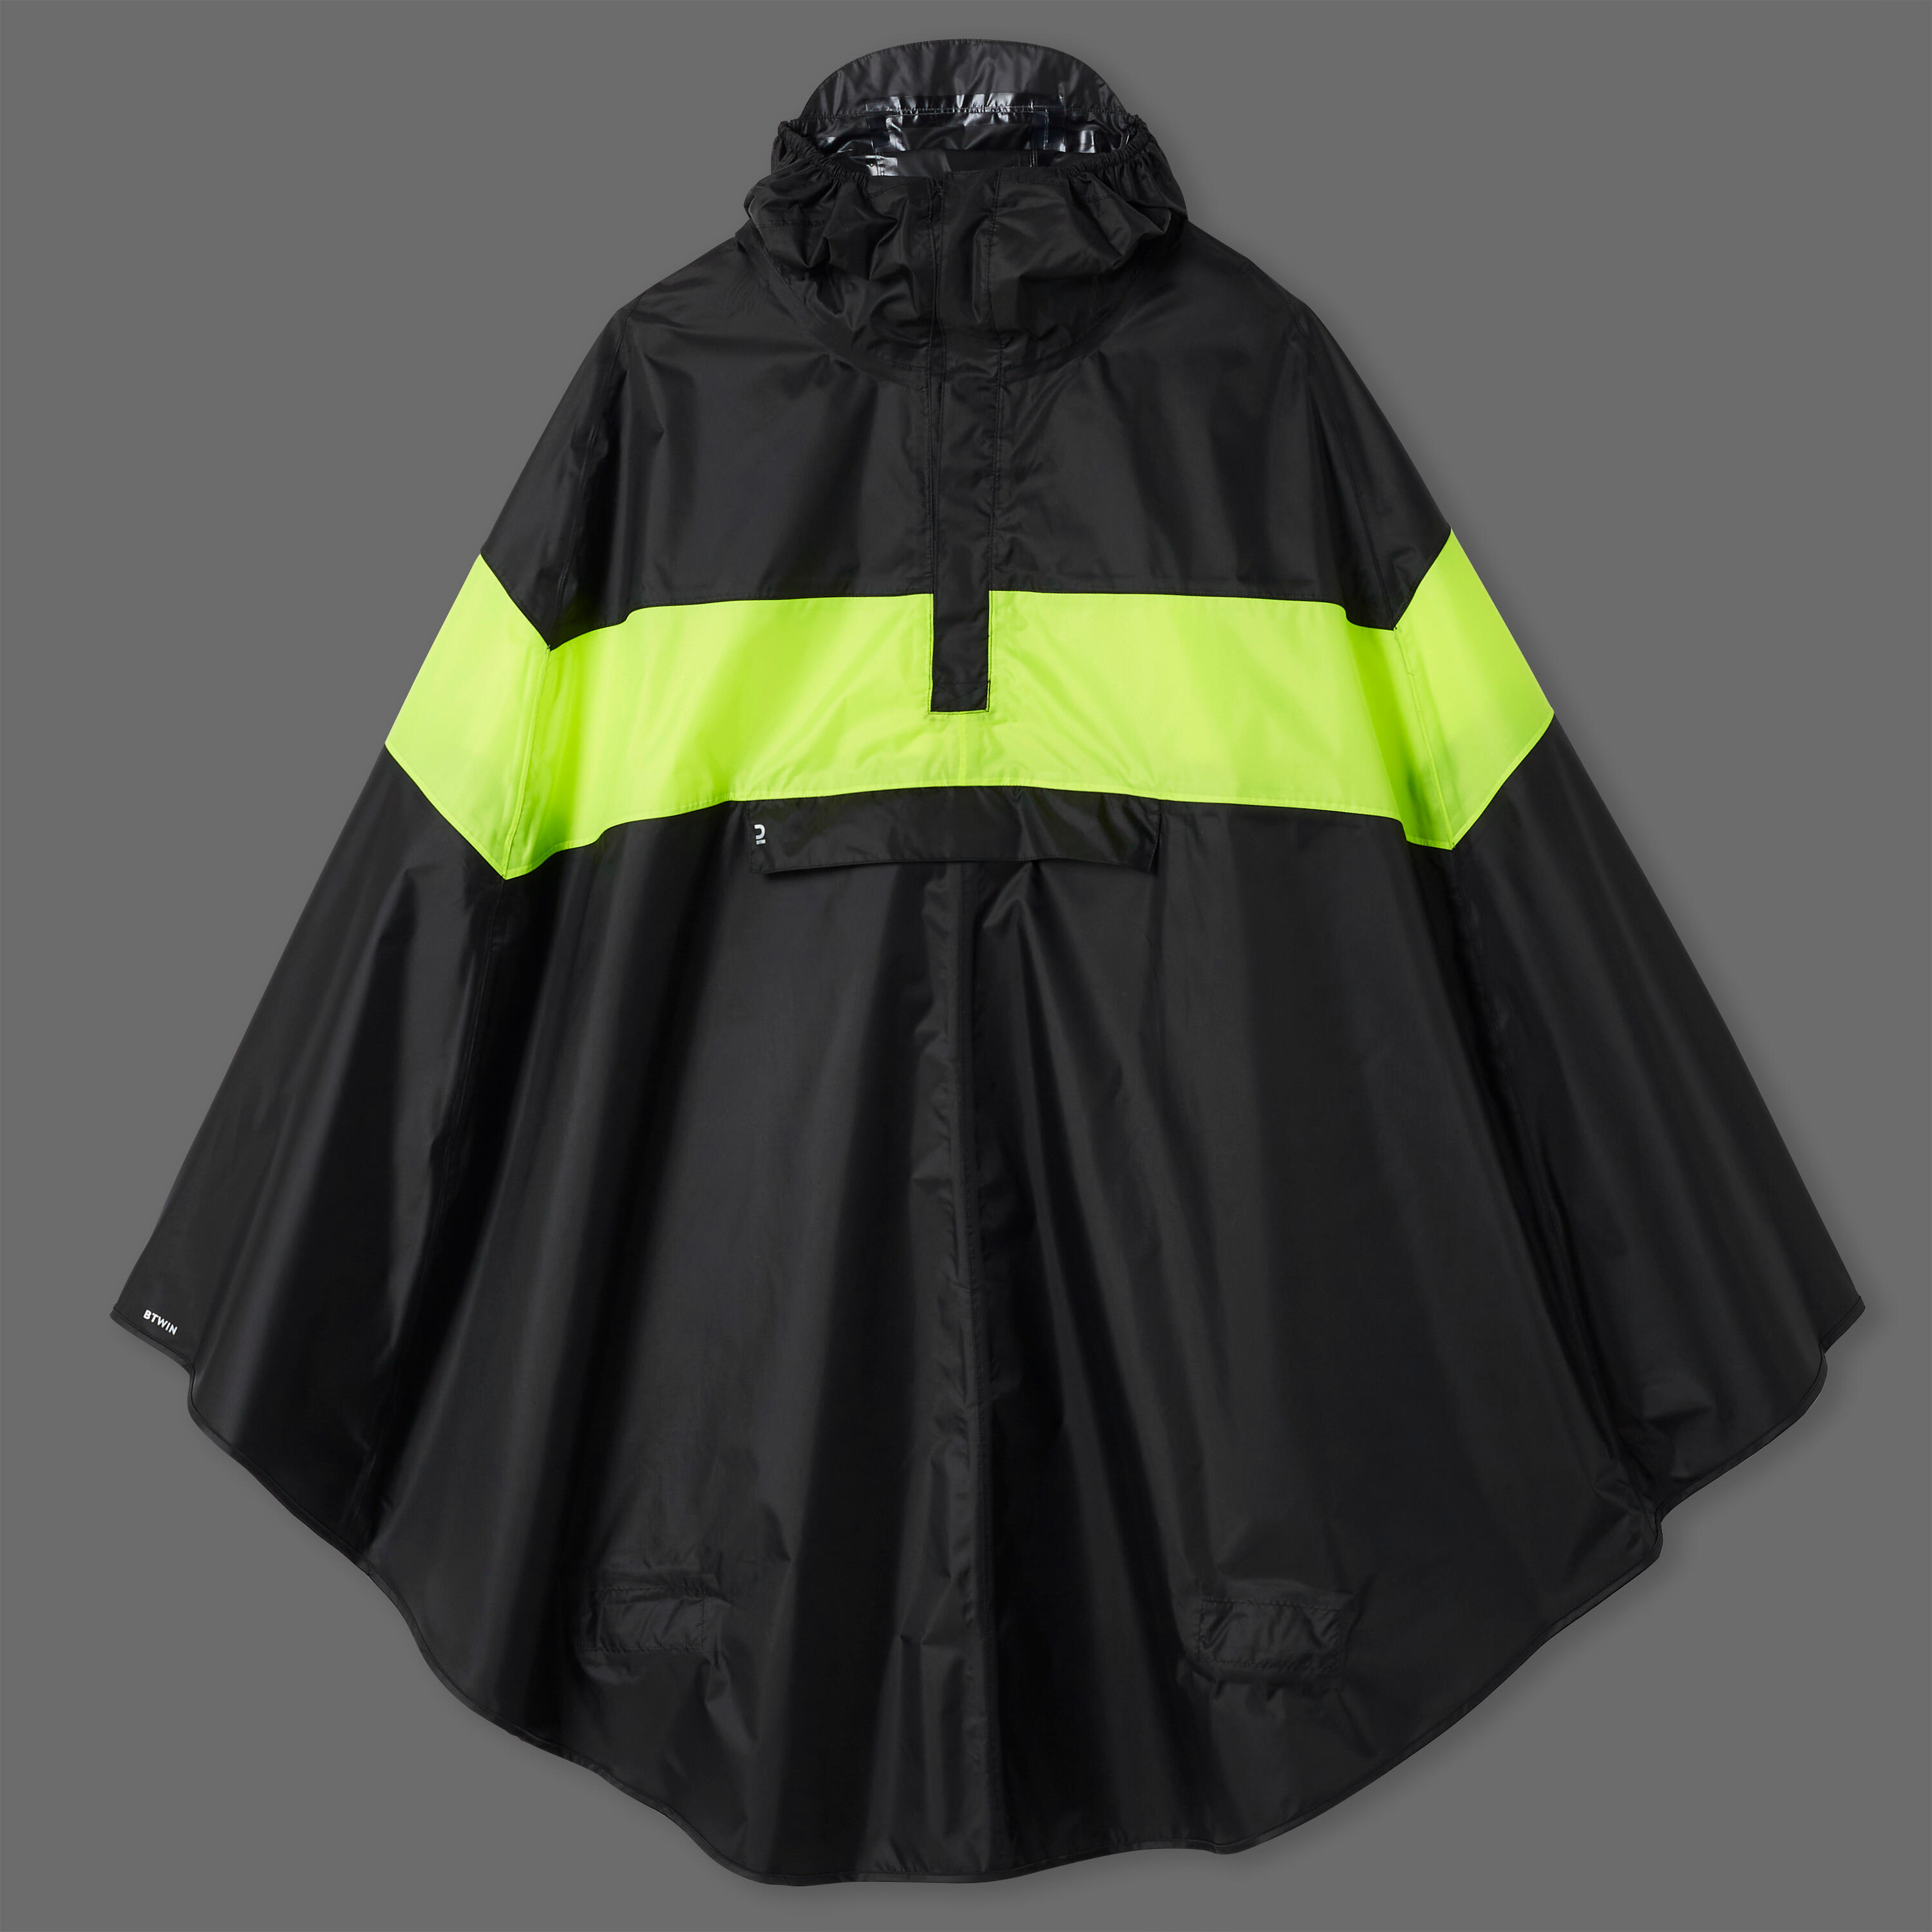 Daytime Visibility City Bike Rain Poncho 120 - Black/Neon Yellow 9/10